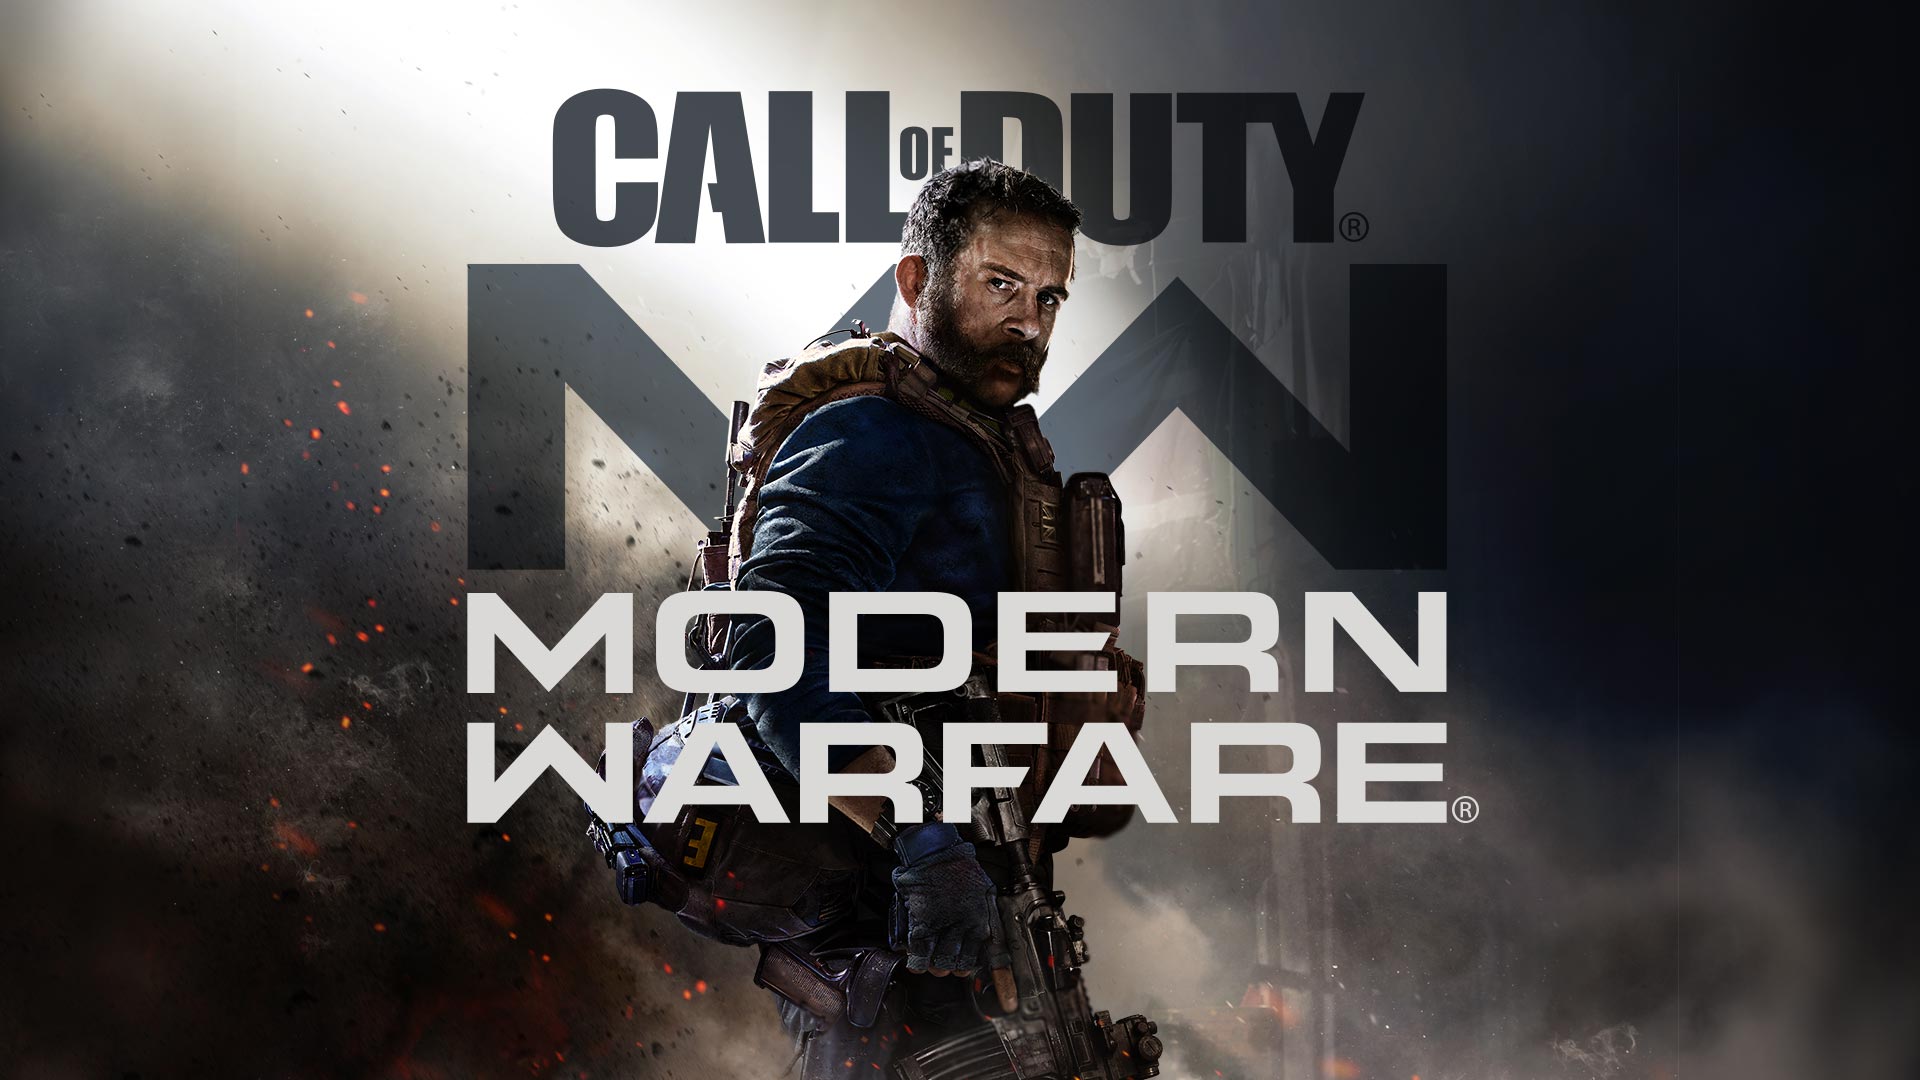 Call of Duty: Modern Warfare free weekend announced, starts April 24